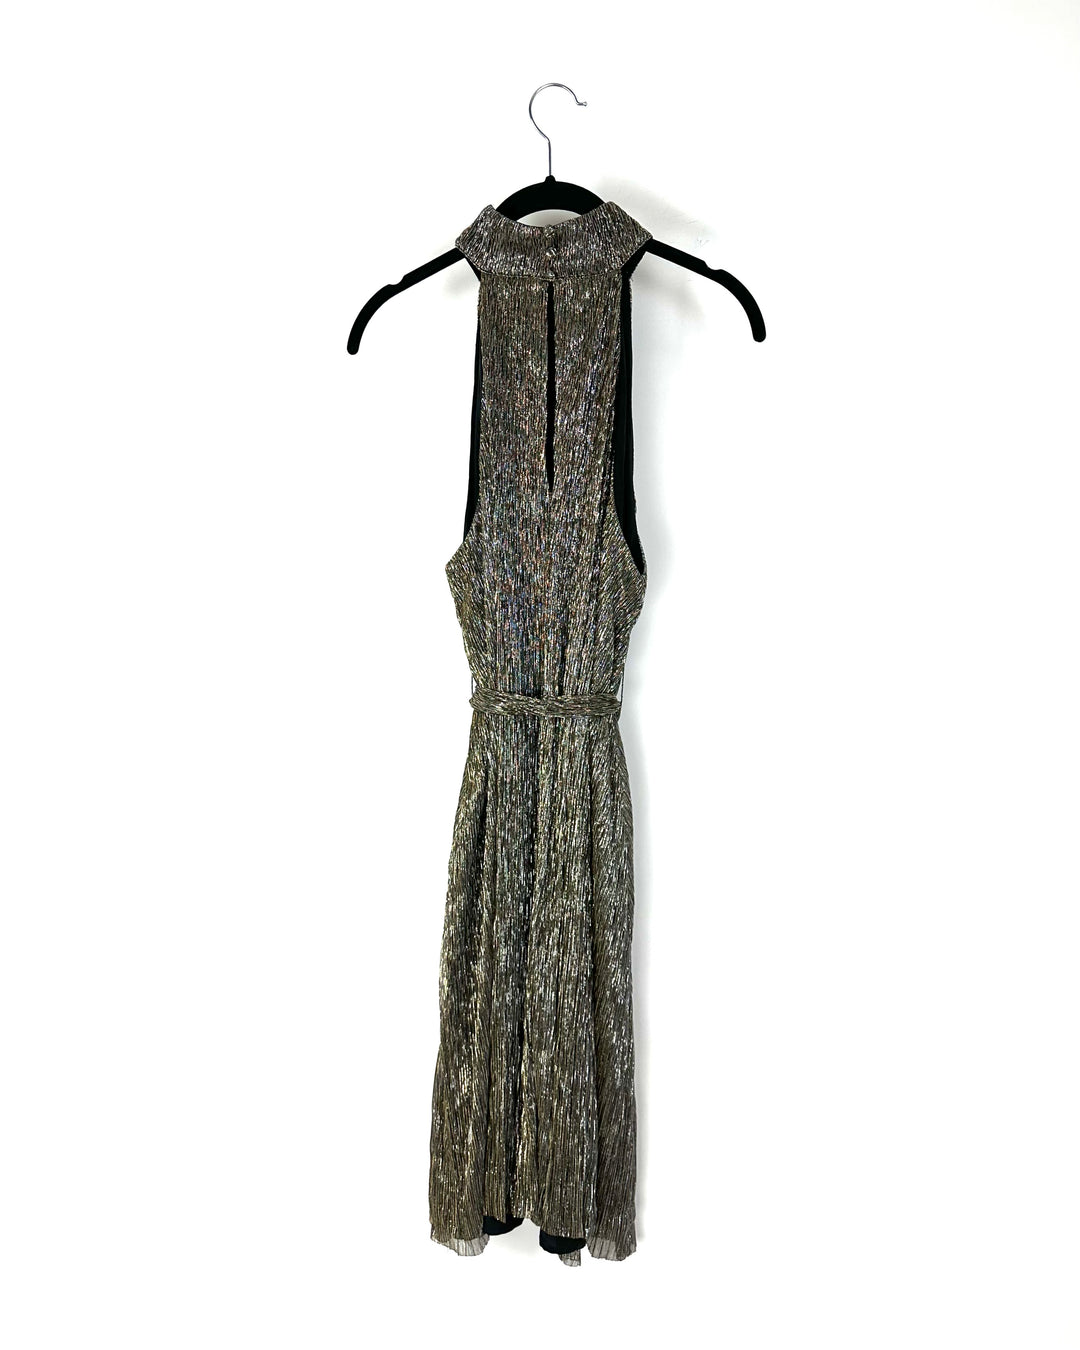 Black Metallic Sleeveless High Neck Dress - Size 0/2, 4/6 and 12/14